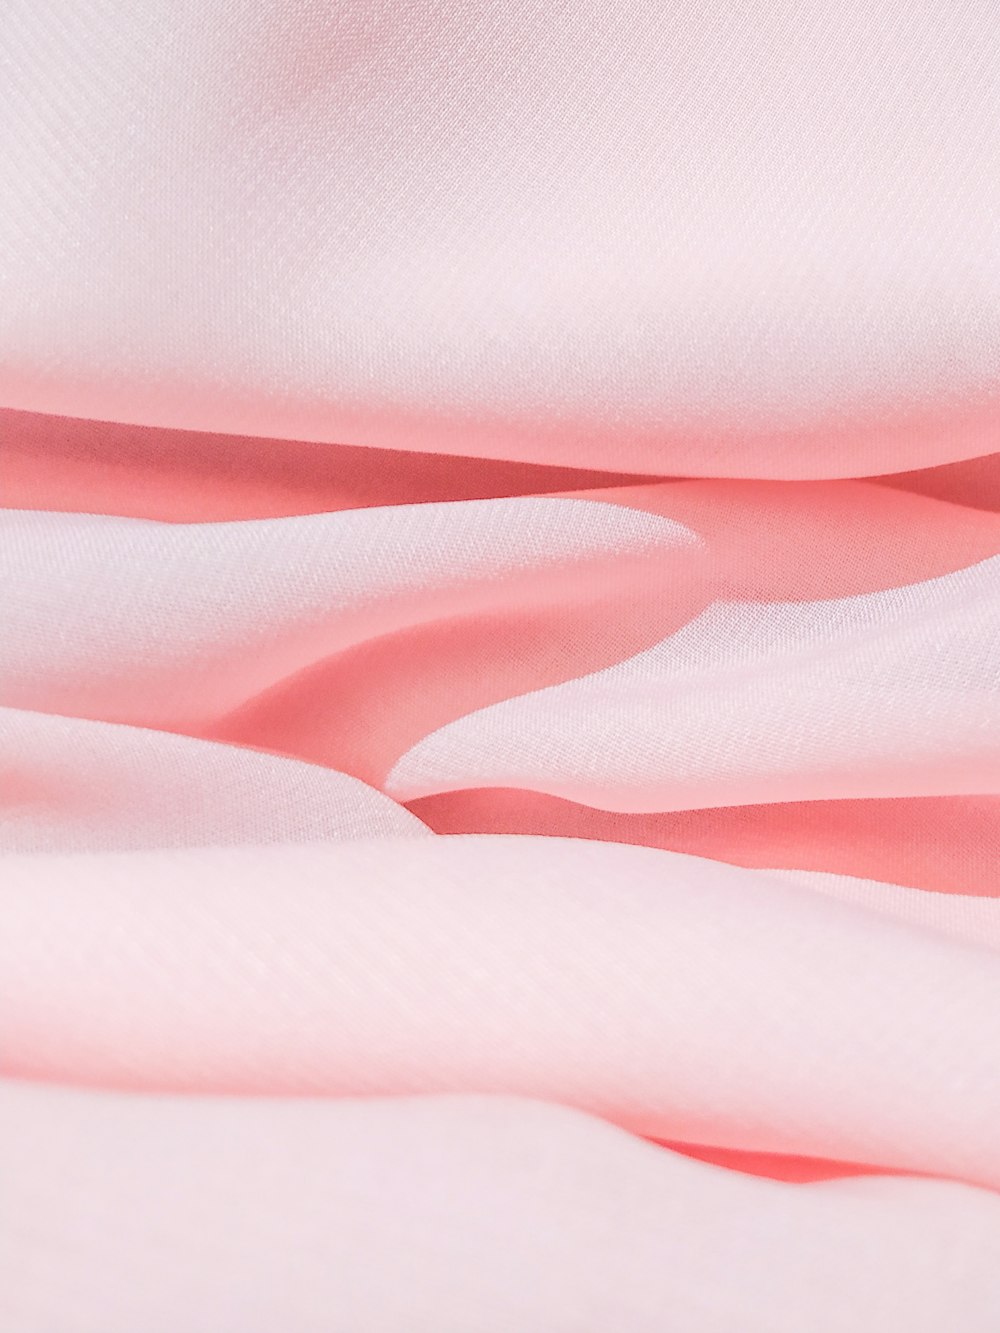 Textile à rayures roses et blanches